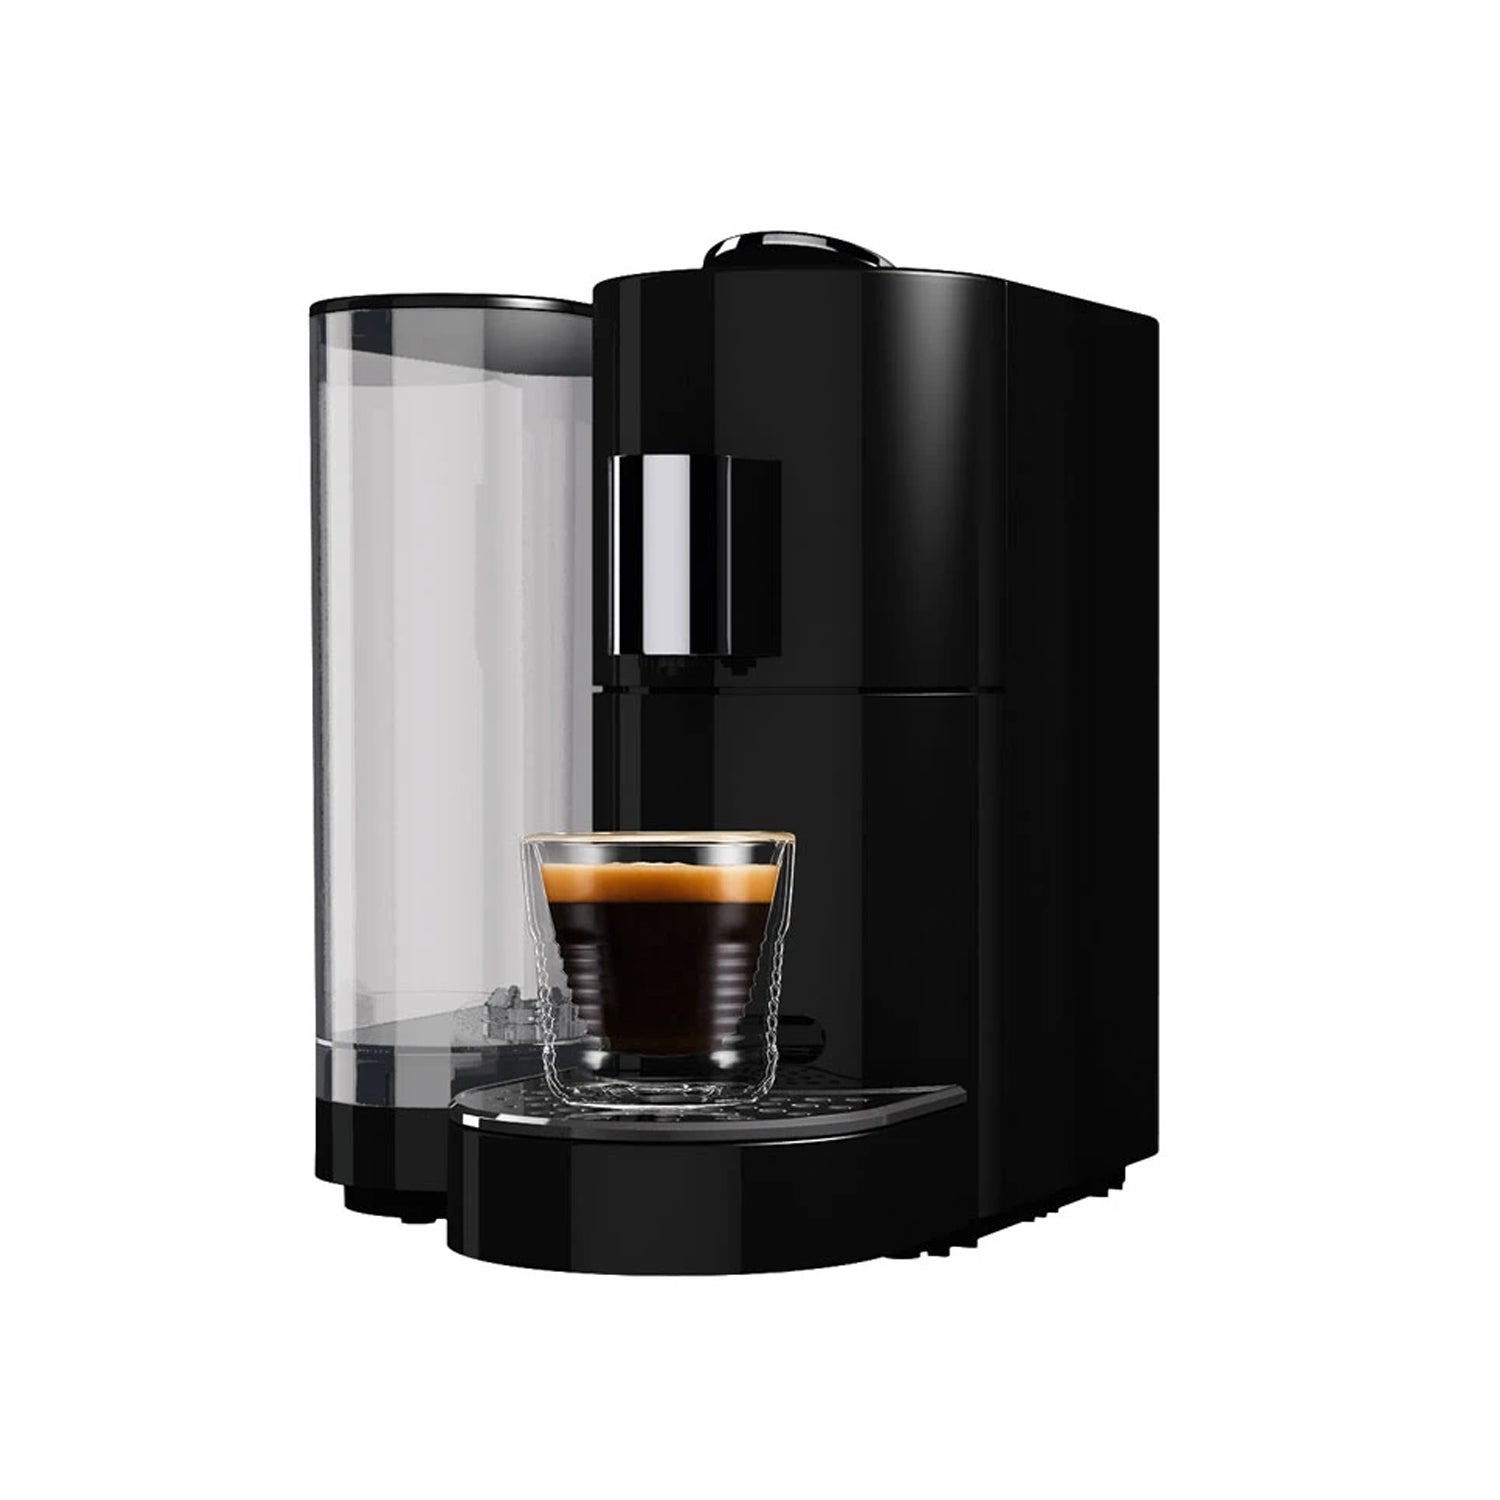 Get Sokany 1450W Multiple Capsule Espresso Coffee Machine Capsule Coffee  Maker from DealatCity Store